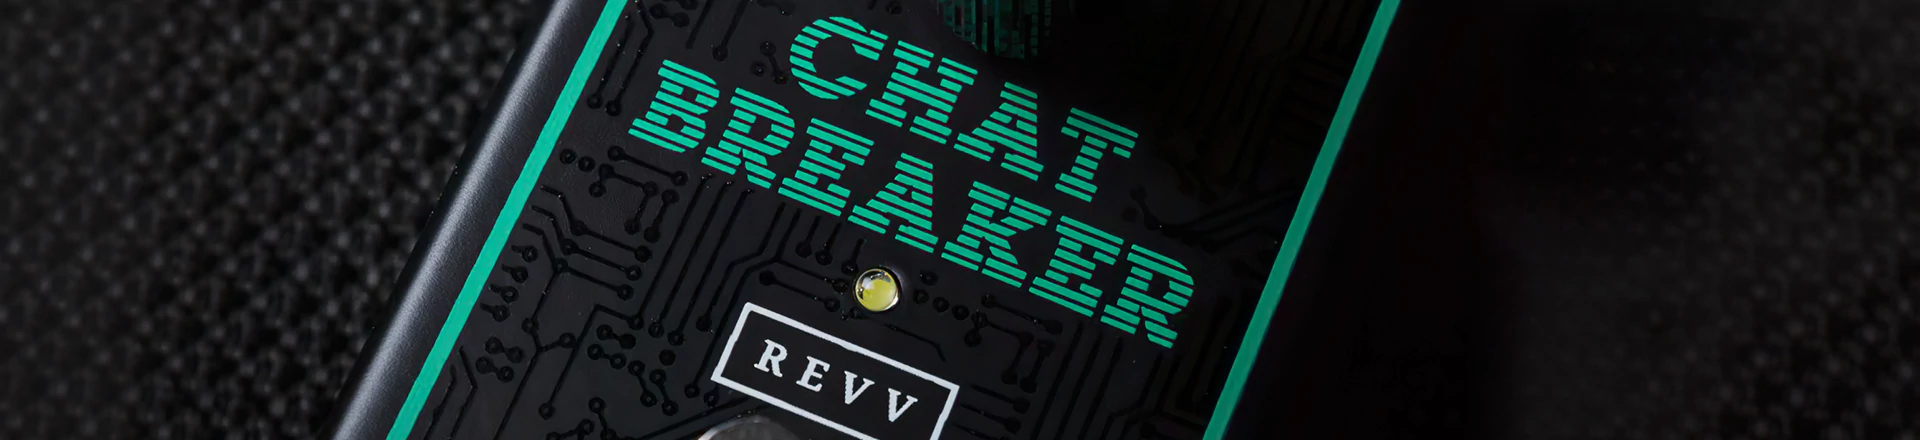 Revv ChatBreaker - AI wkracza do świata gitary